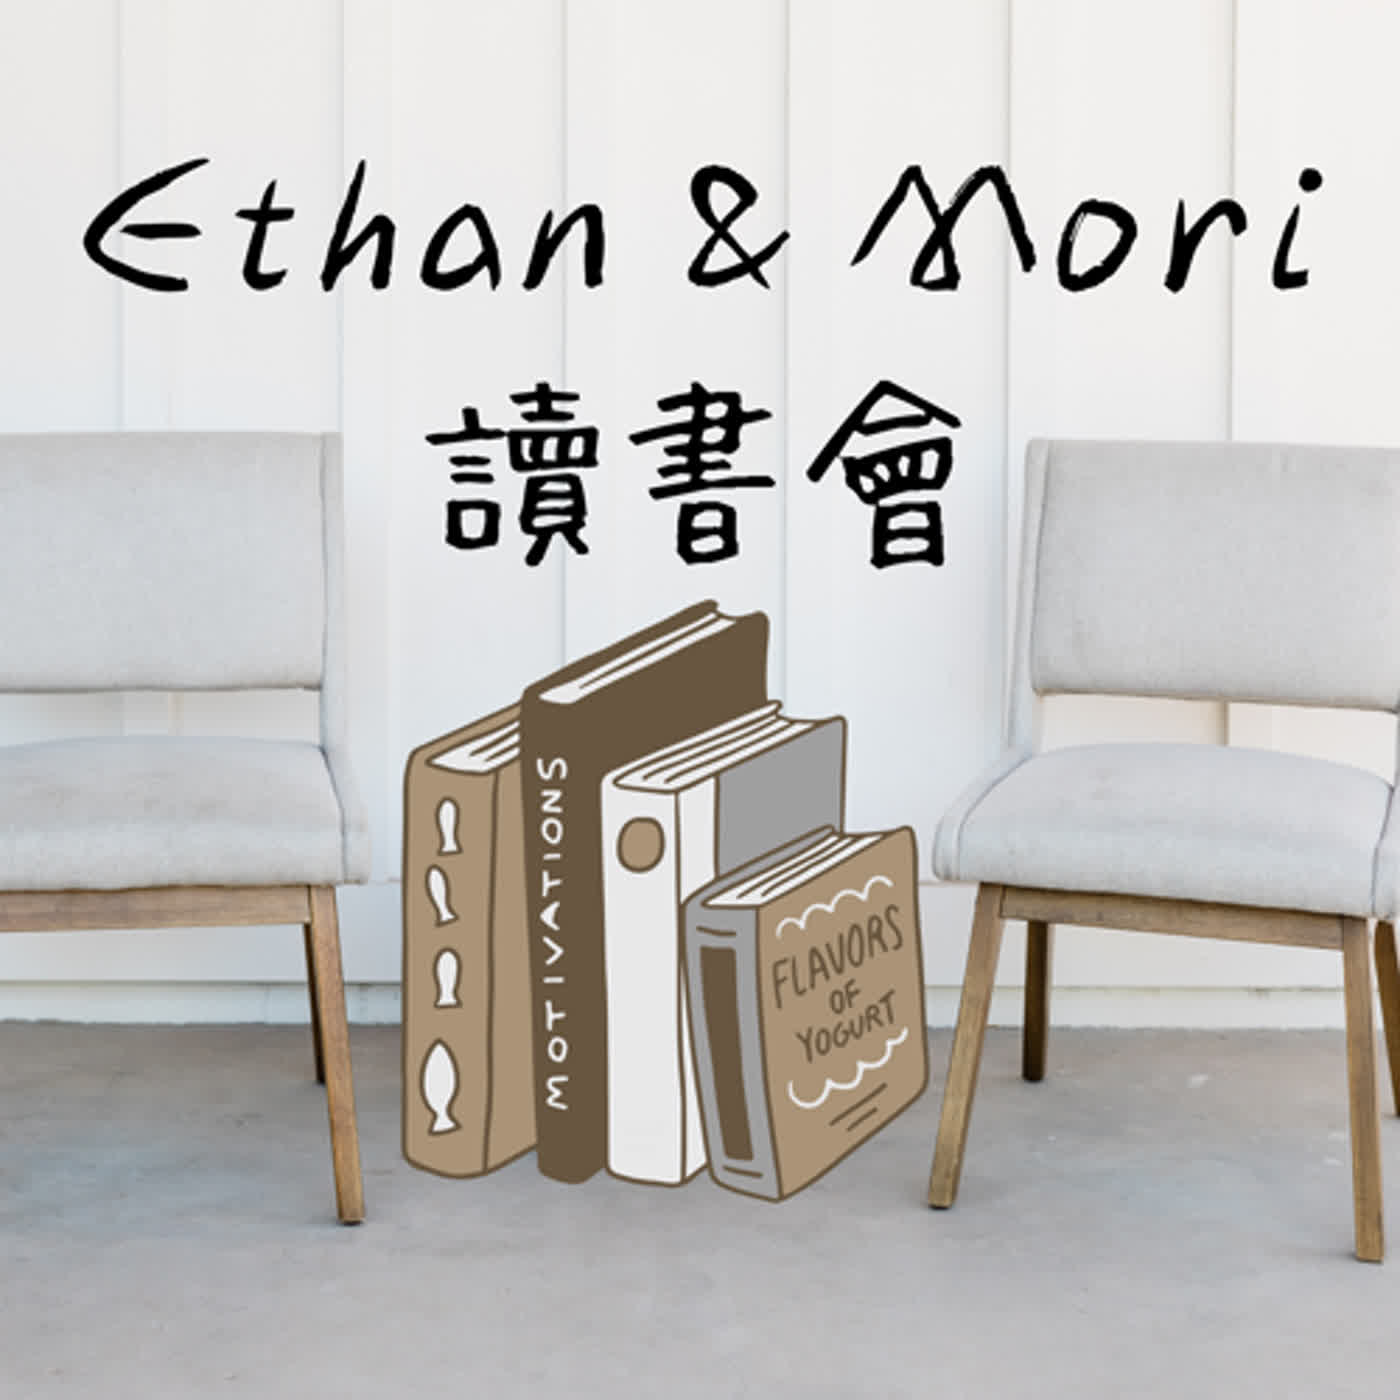 Ethan & Mori 讀書會